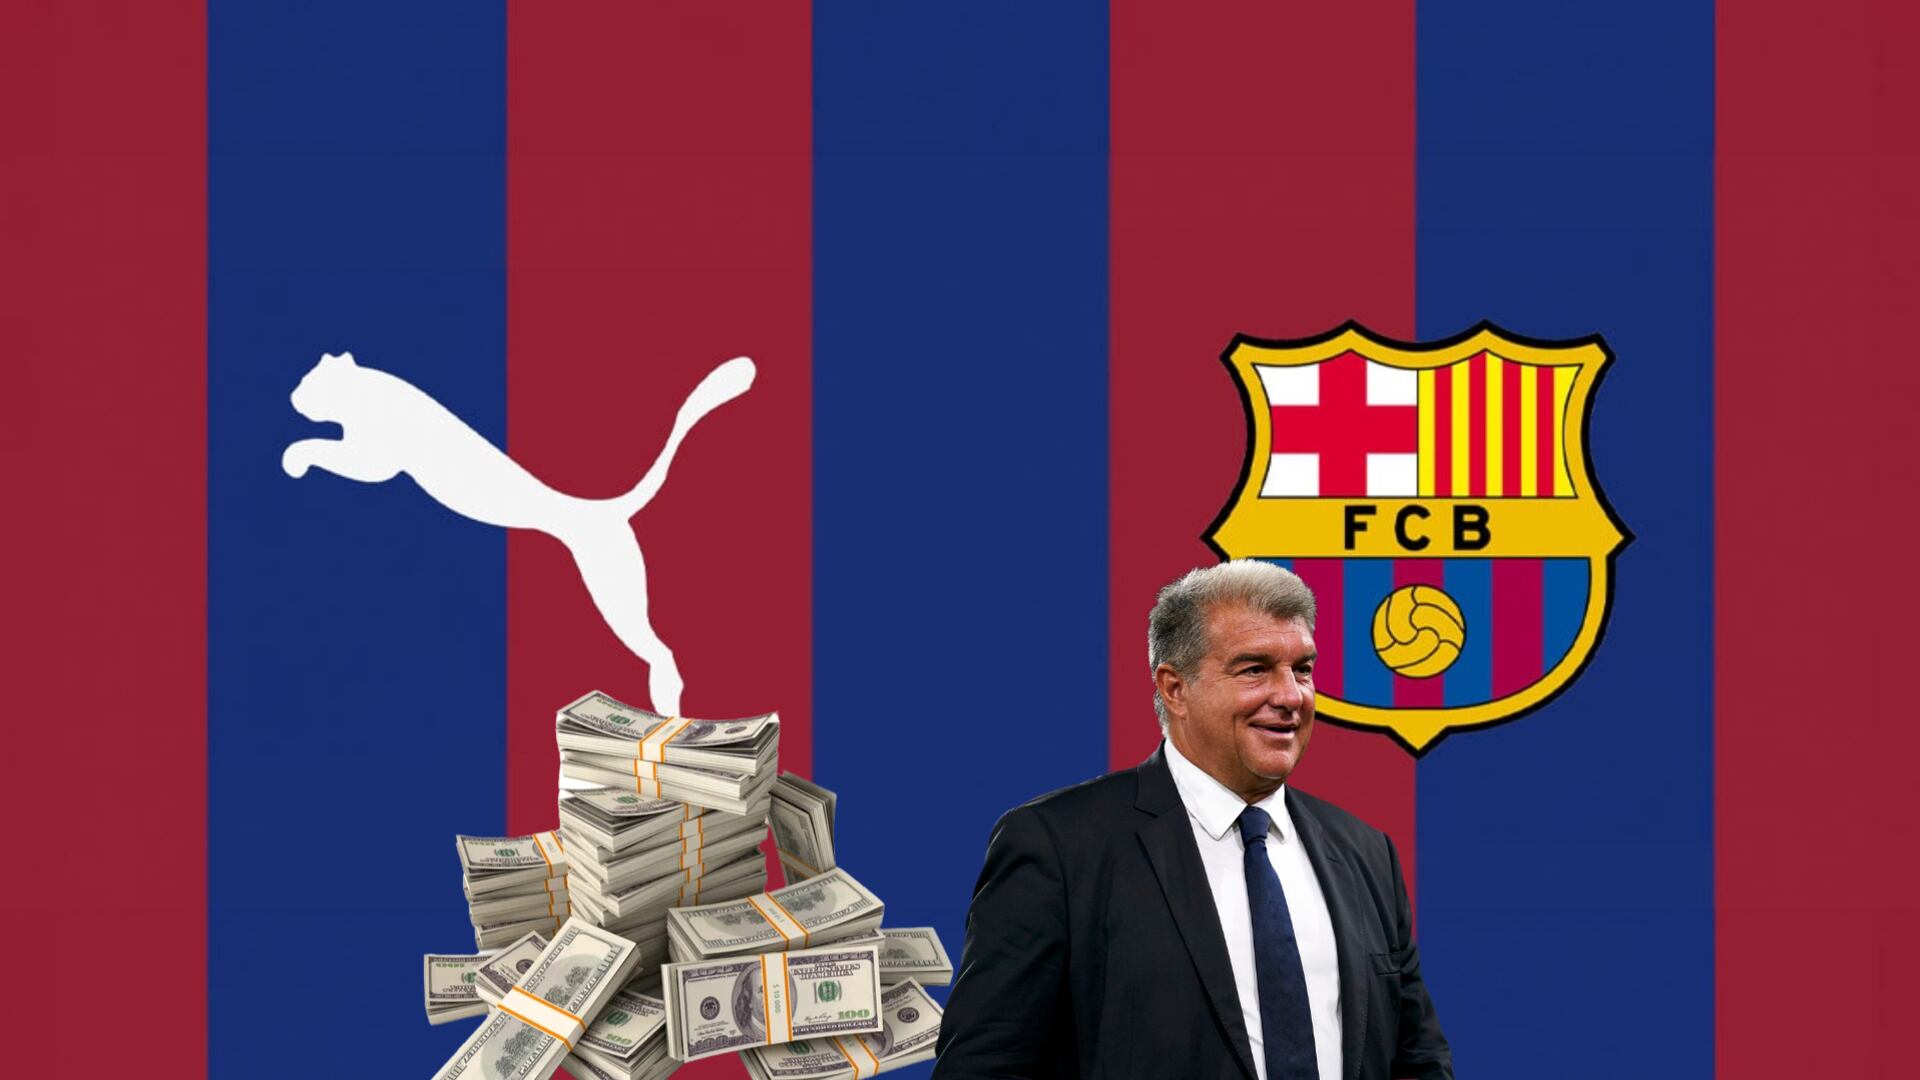 Puma to FC Barcelona? The German company is set offer Barca a big money deal 